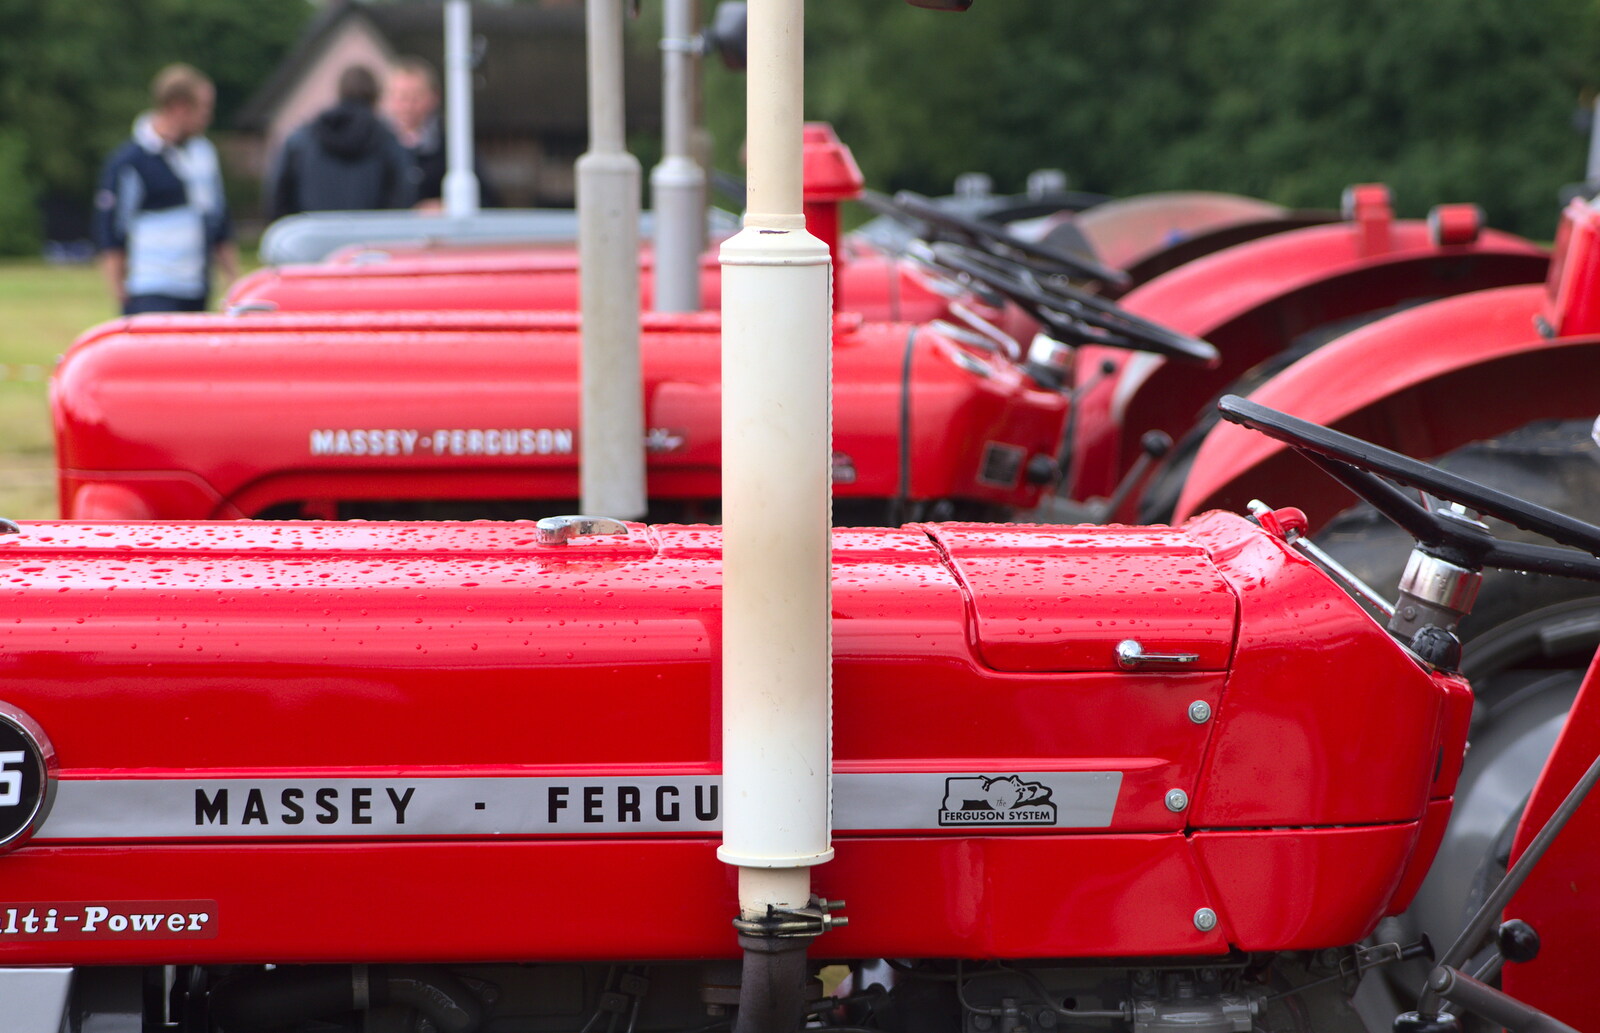 A line-up of red Massey-Fergusons from Thrandeston Pig, Little Green, Thrandeston, Suffolk - 29th June 2014